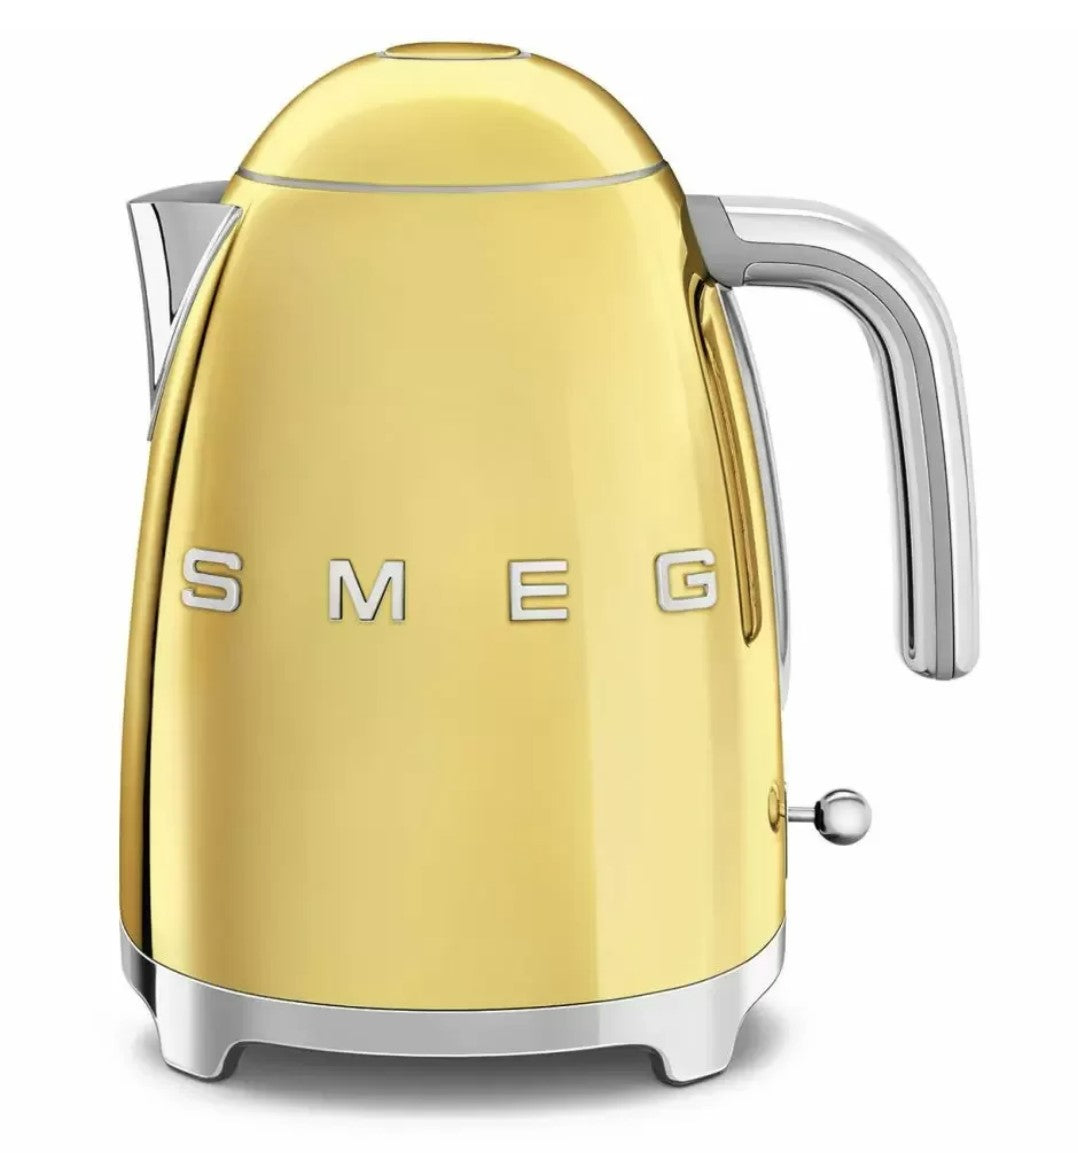 SMEG Retro-Style Electric Kettle